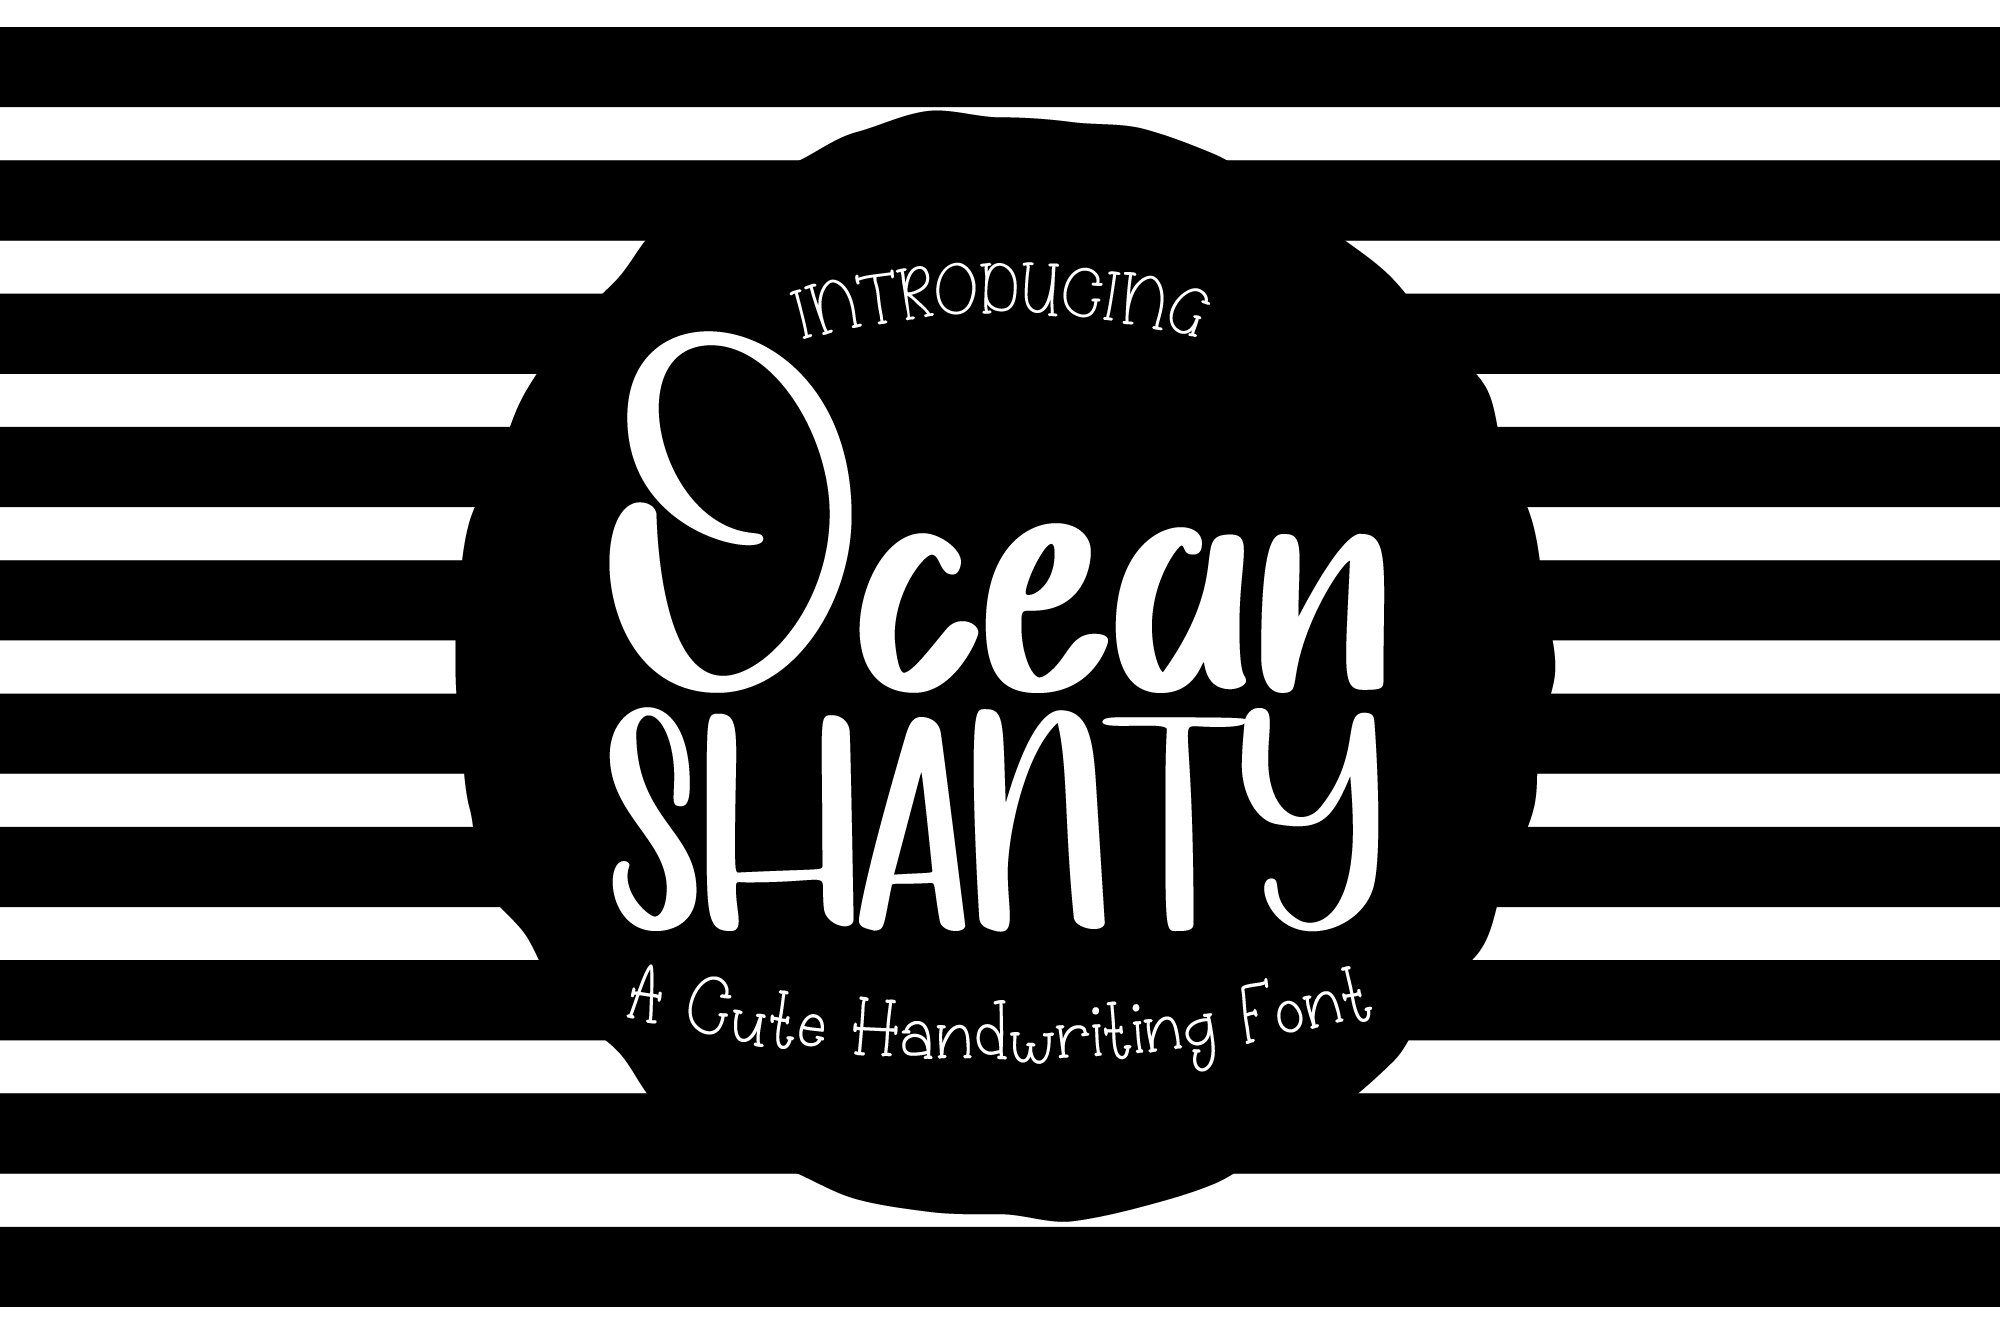 Ocean Shanty Cute Handwriting Font cover image.